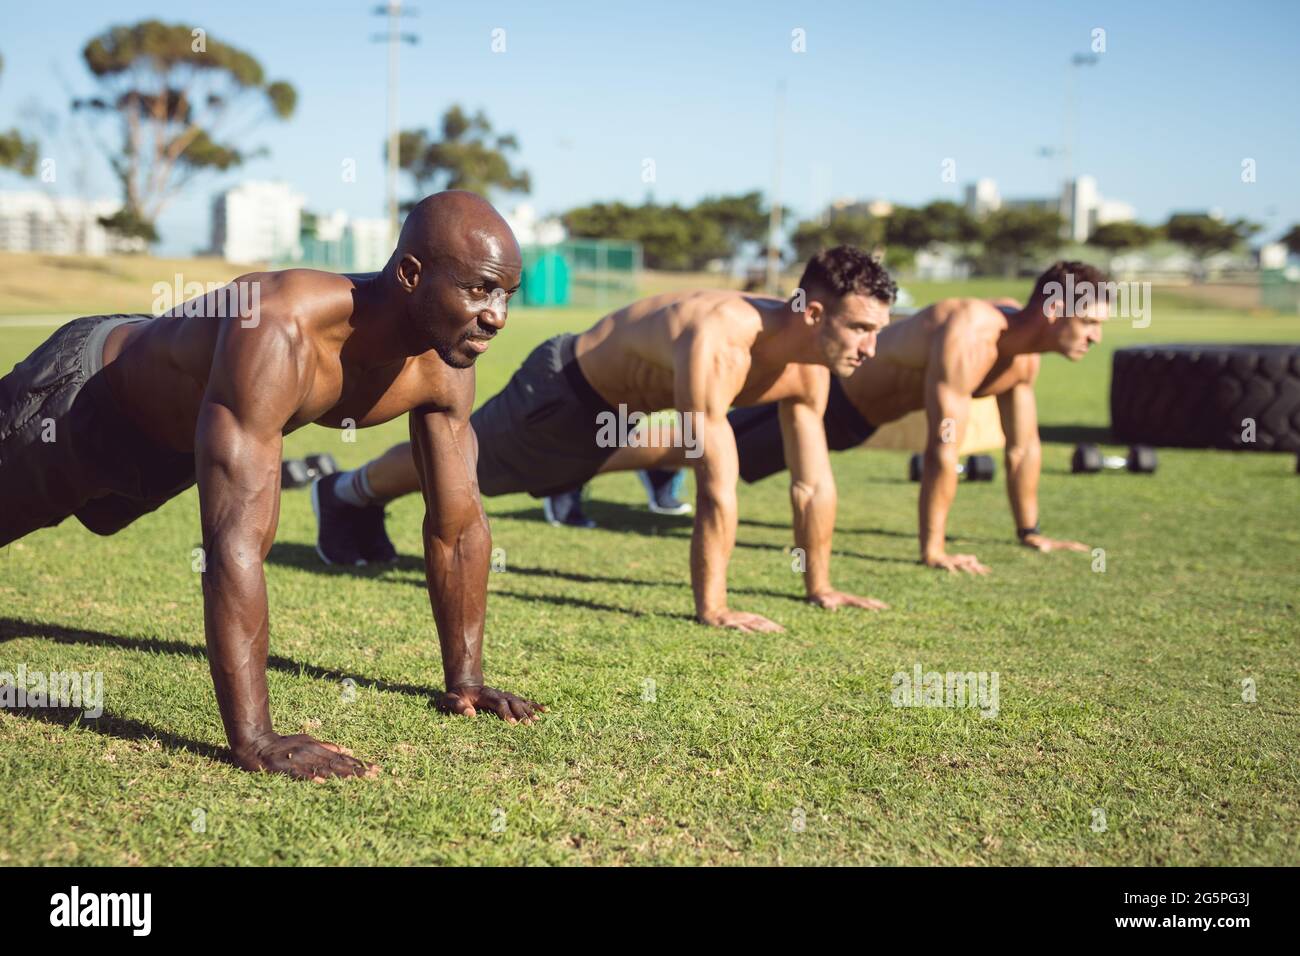 https://c8.alamy.com/comp/2G5PG3J/diverse-group-of-muscular-men-doing-push-ups-exercising-outdoors-2G5PG3J.jpg